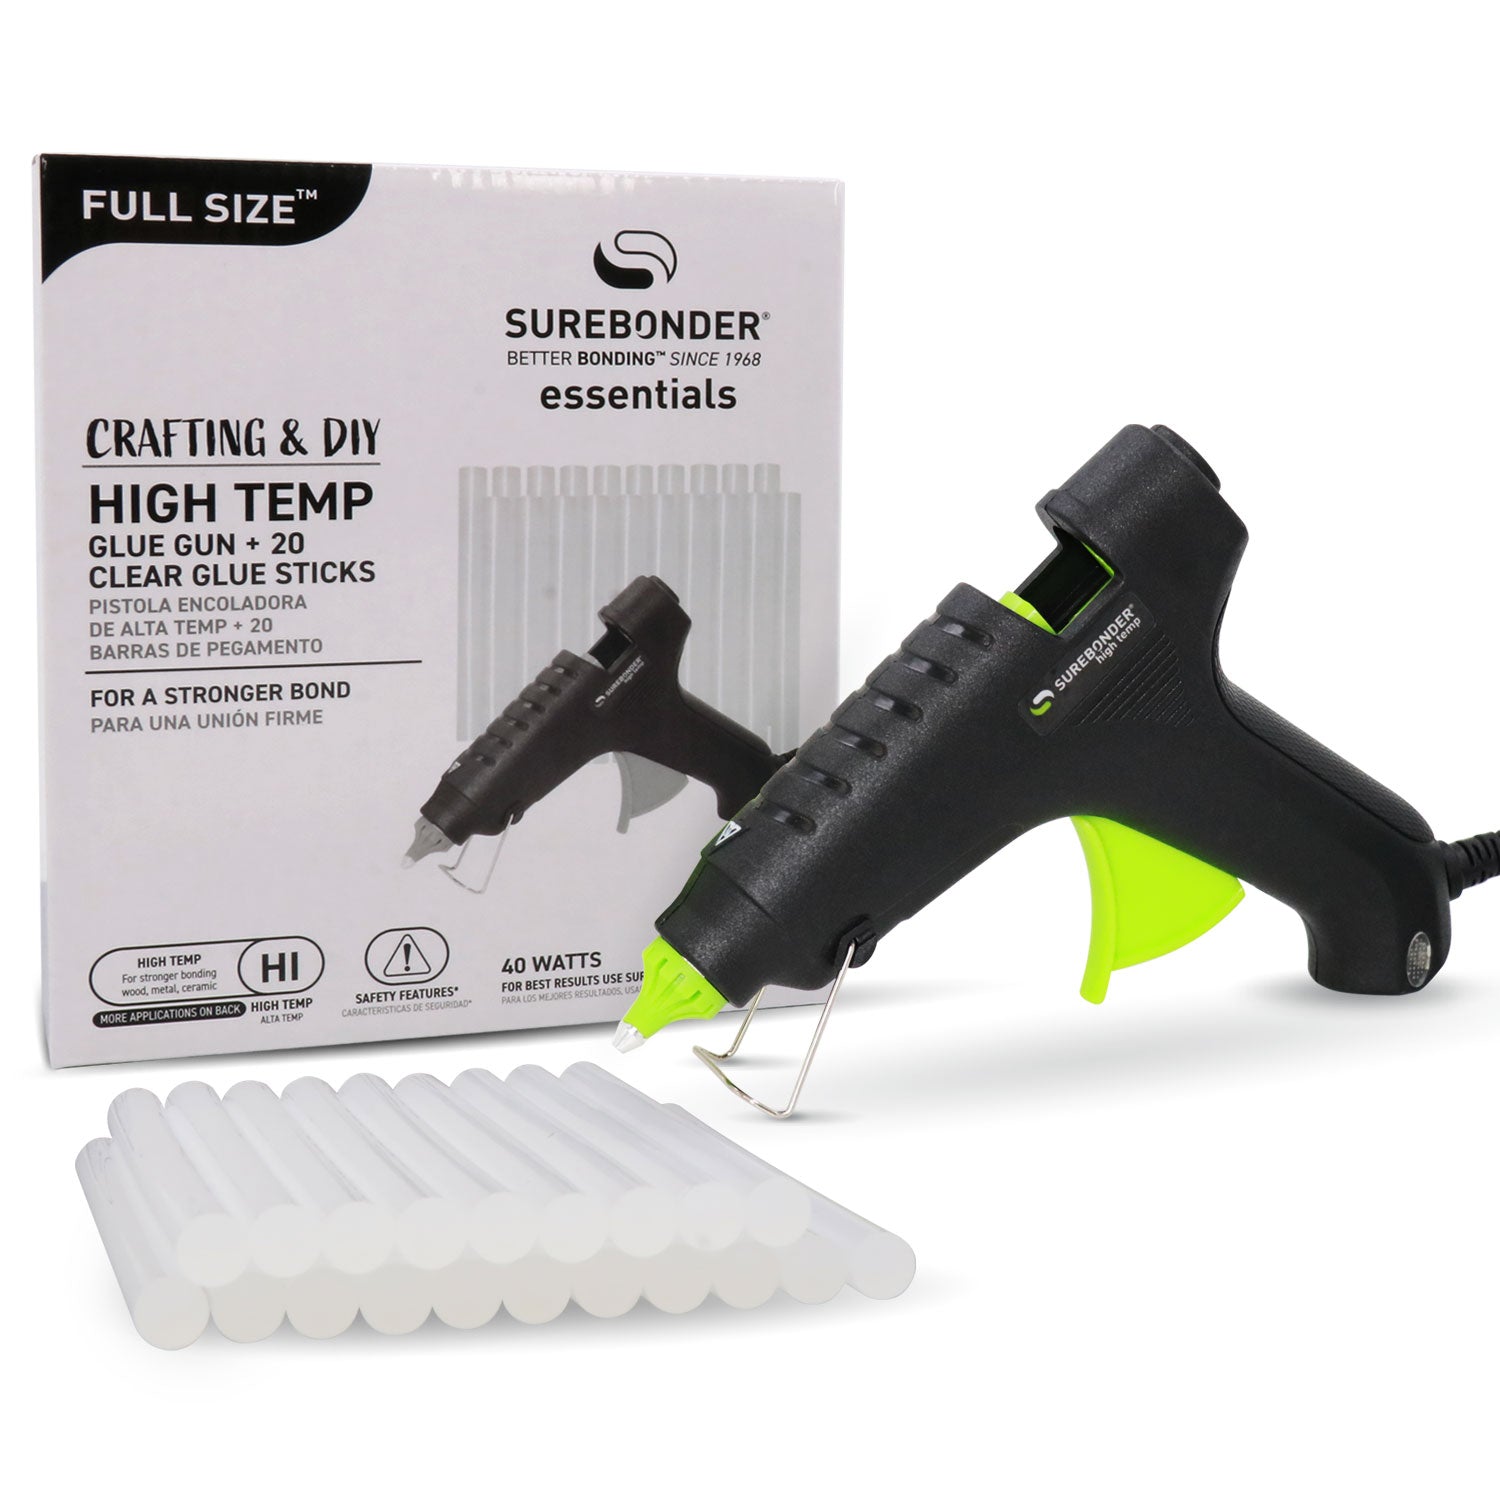 Full Size 40W High Temperature Glue Gun Kit with 20 Glue Sticks – Surebonder